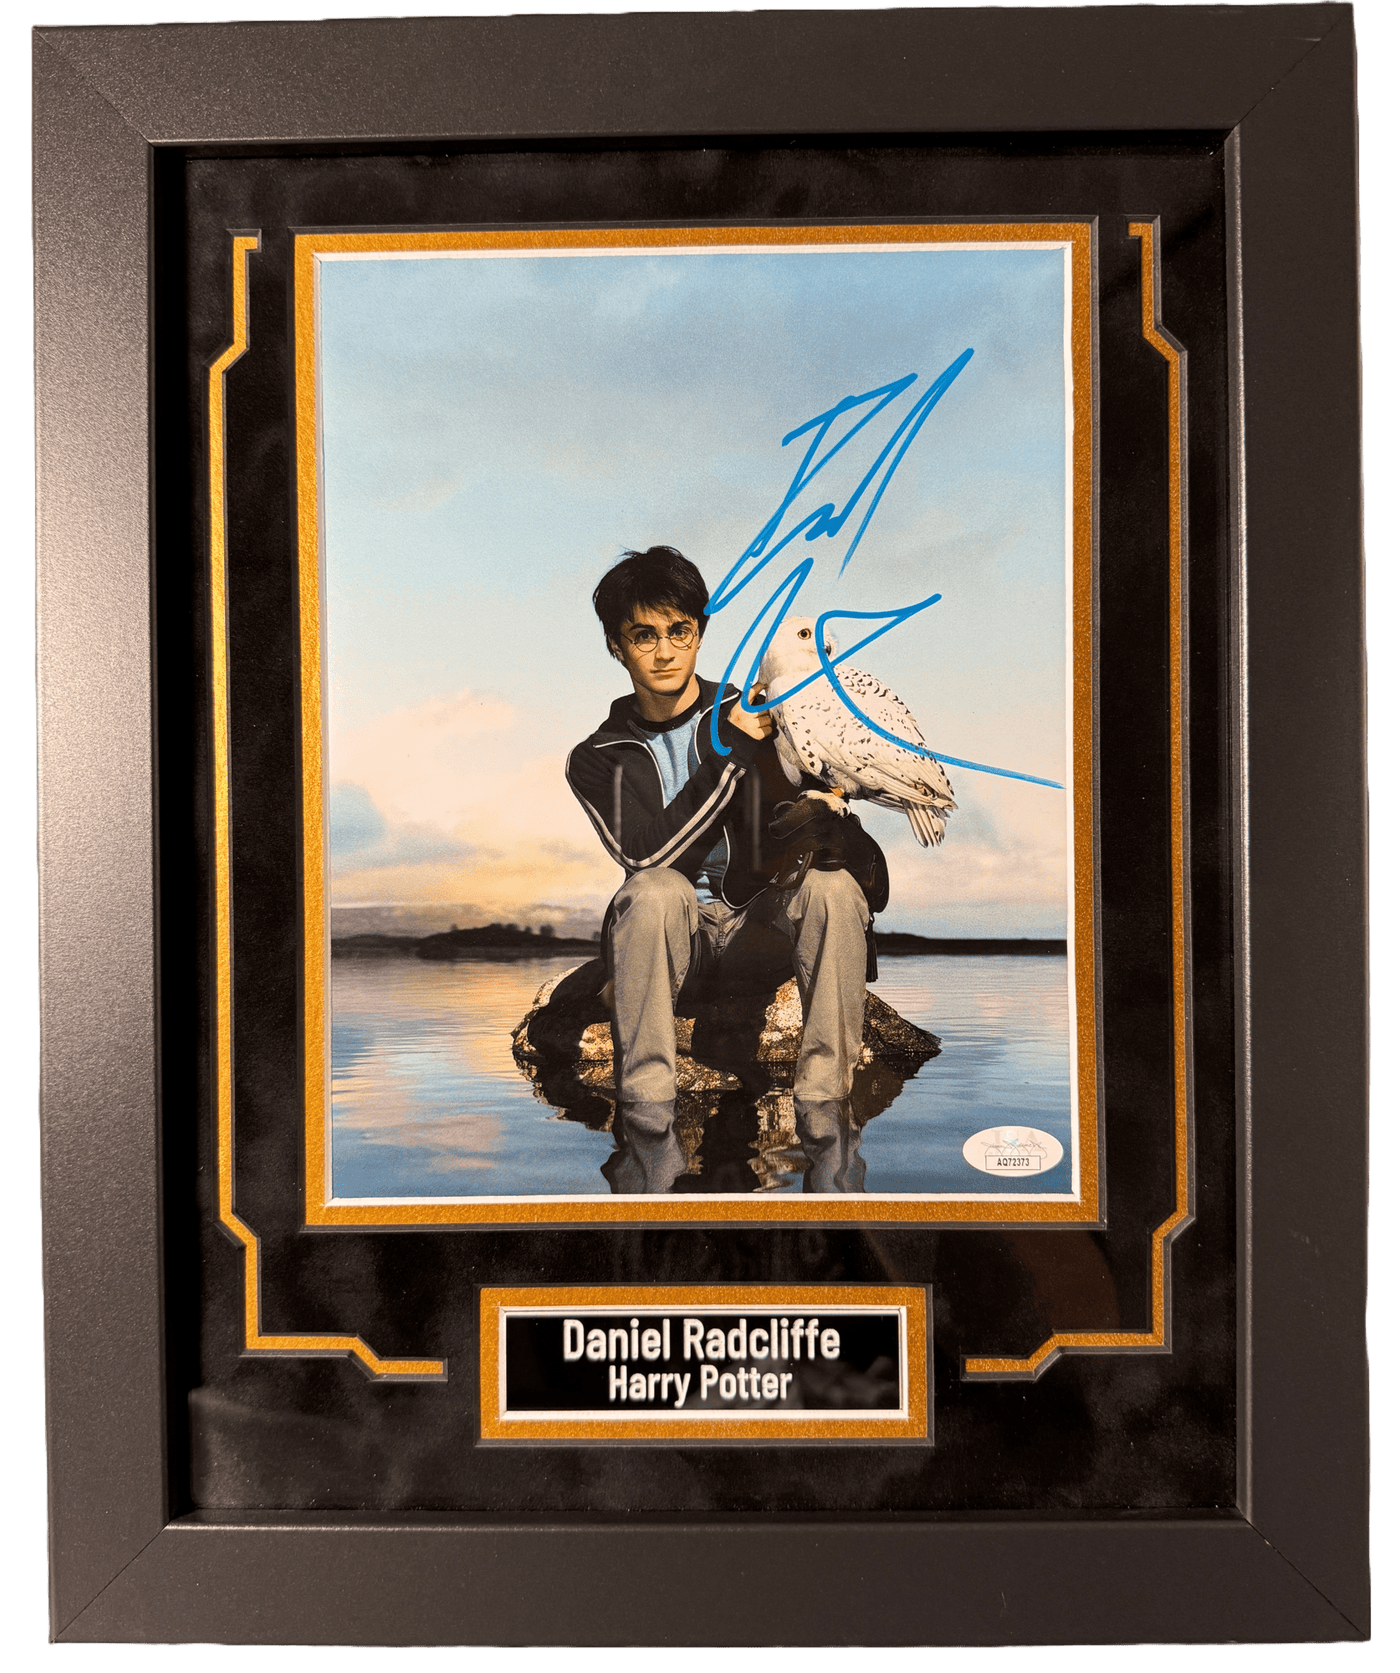 Daniel Radcliffe Signed And Custom Framed 8x10 Photo Harry Potter Autographed JSA COA